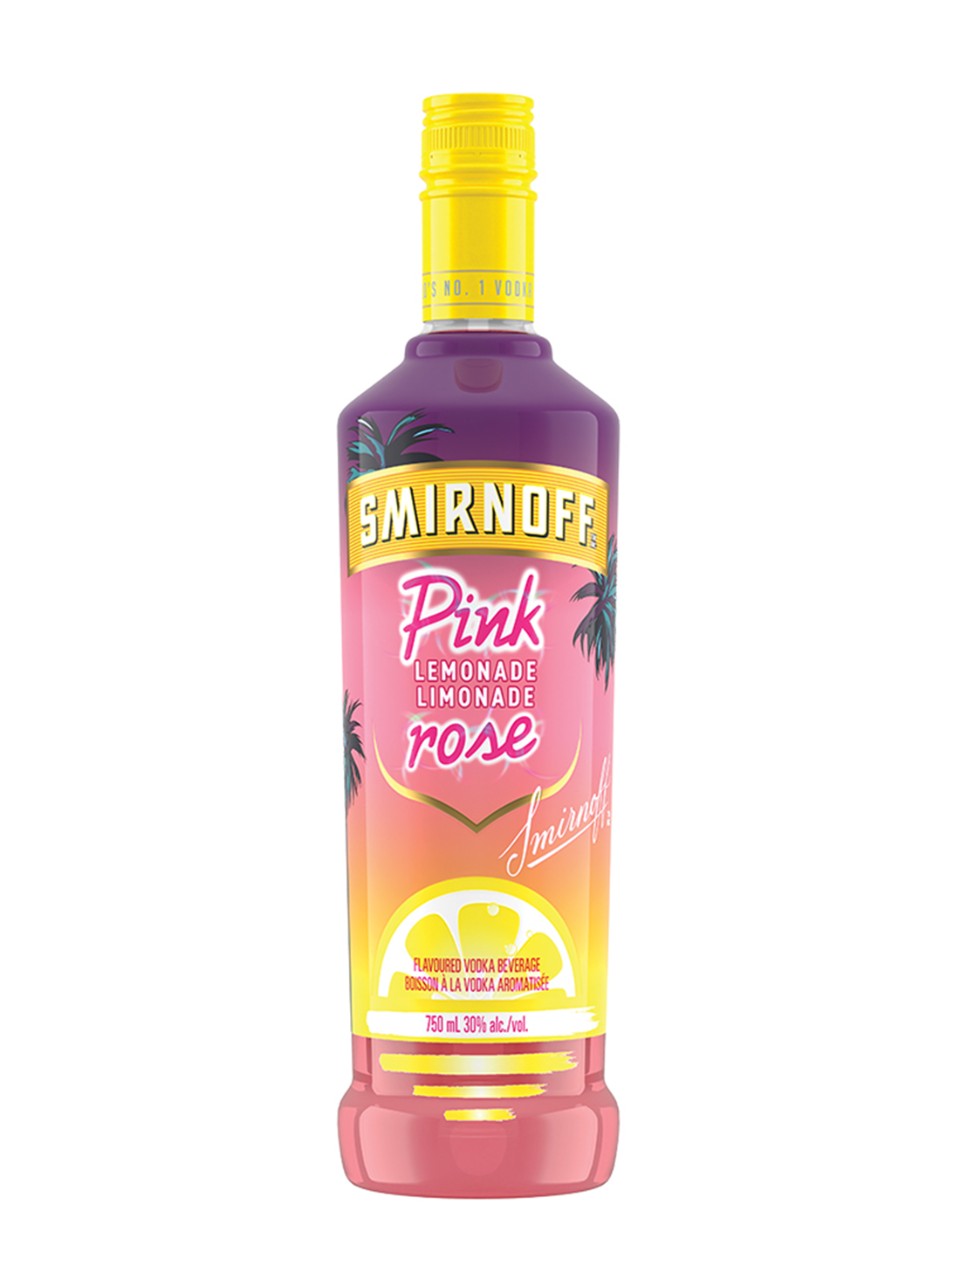 Smirnoff Pink Lemonade 750 mL bottle